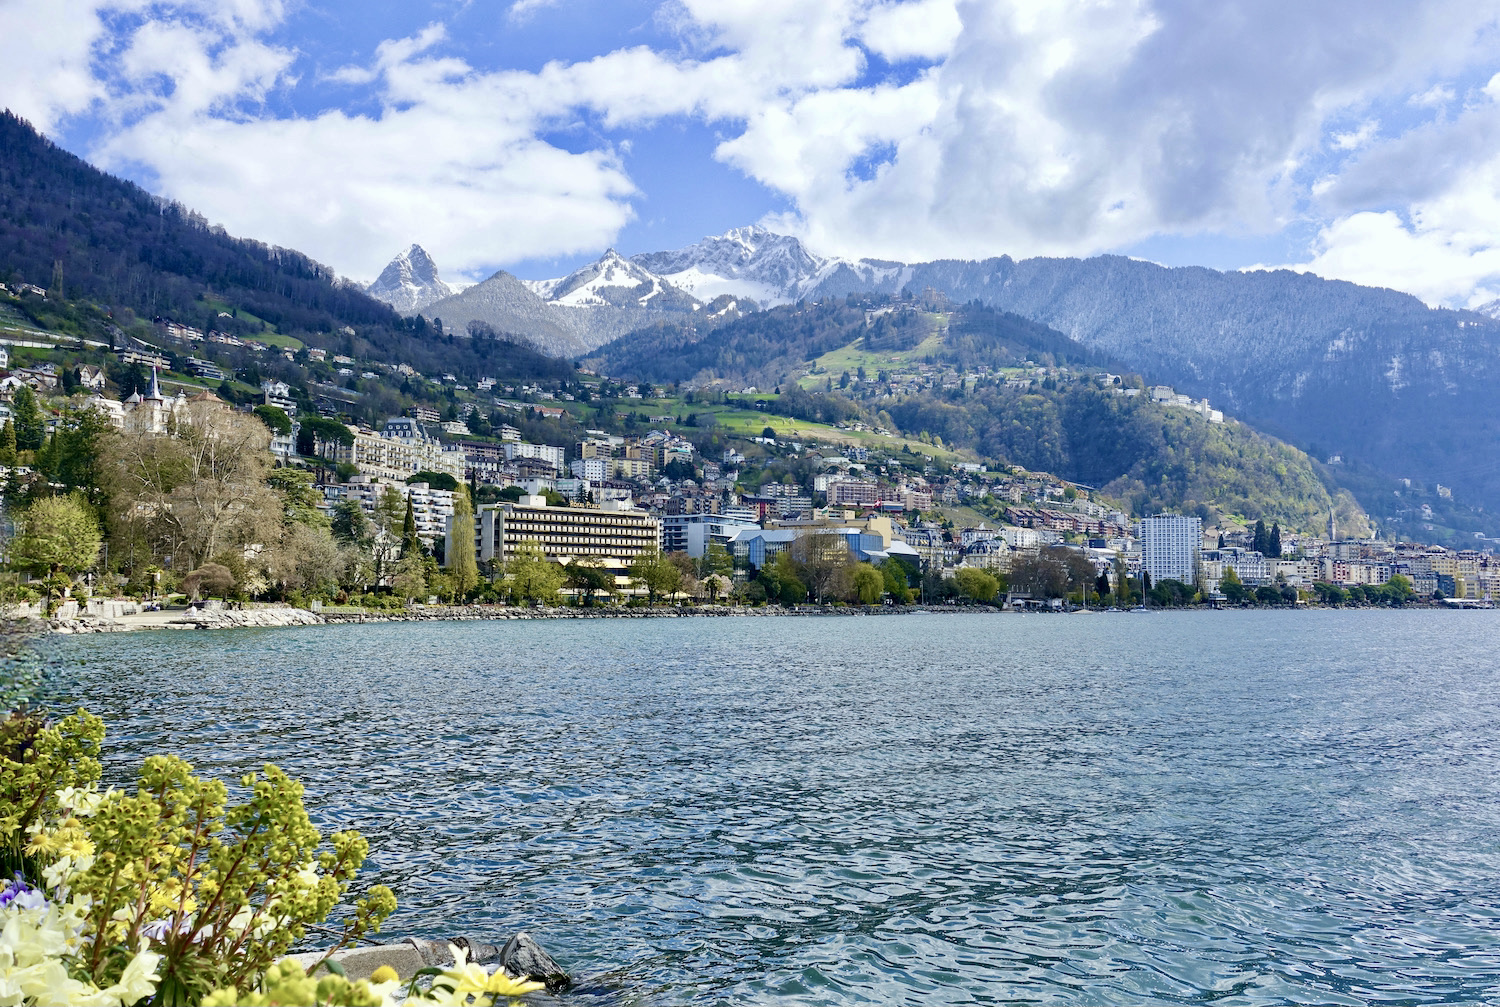 Montreux Lake Geneva/Switzerland - guide to visiting Switzerland